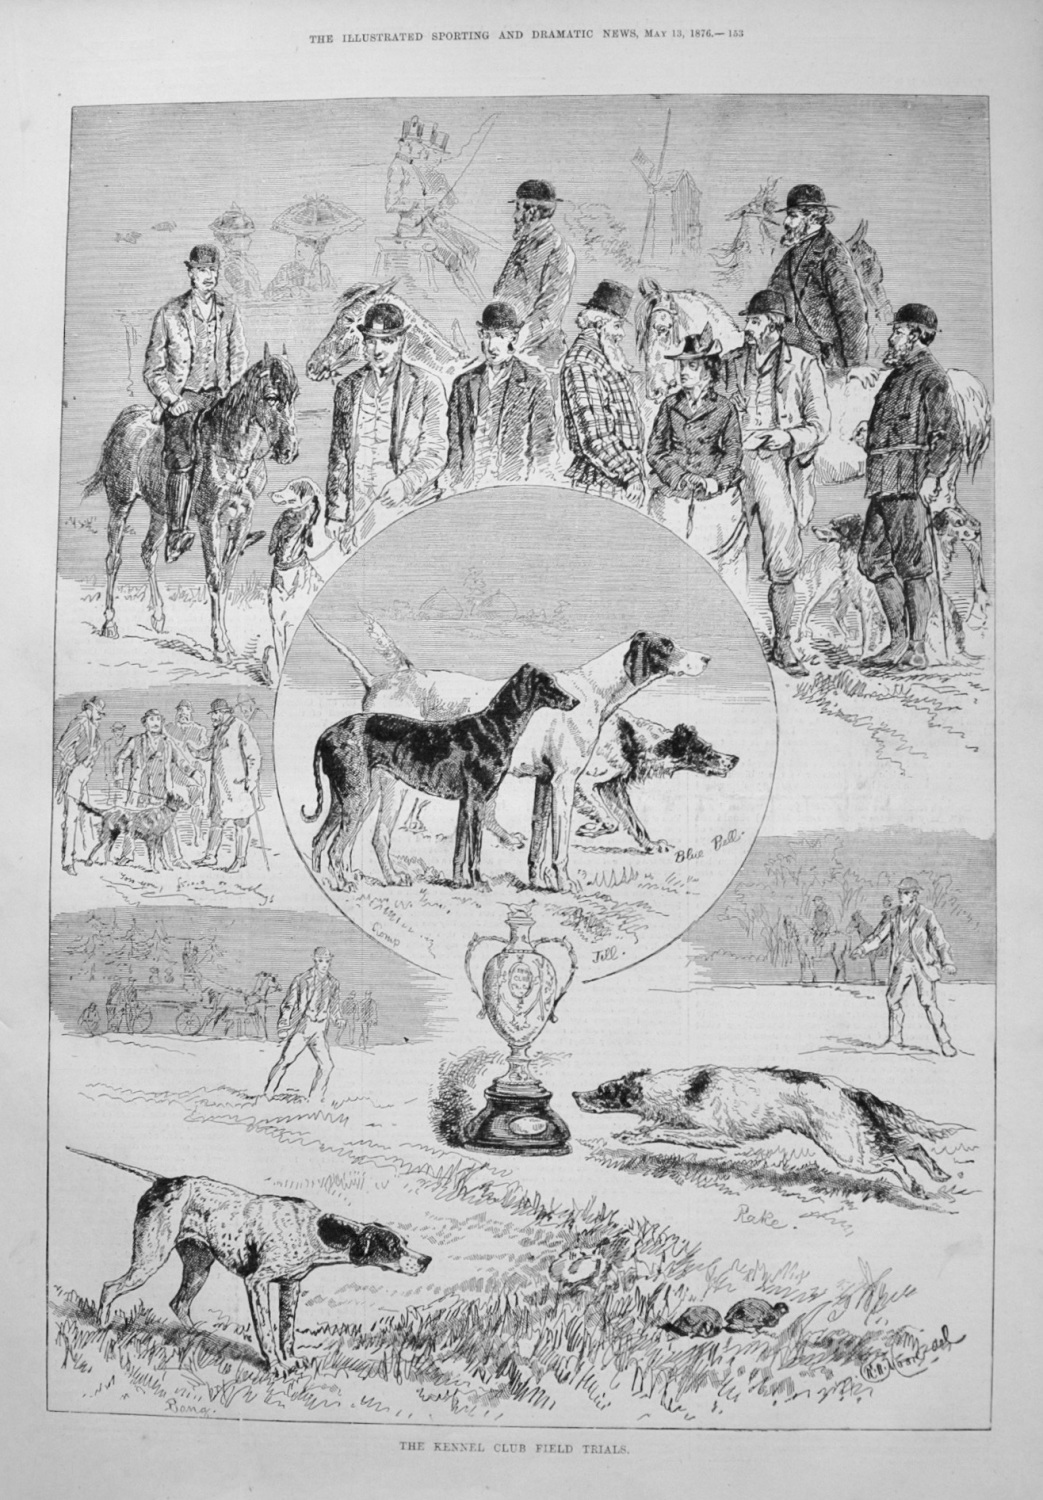 The Kennel Club Field Trials. 1876.